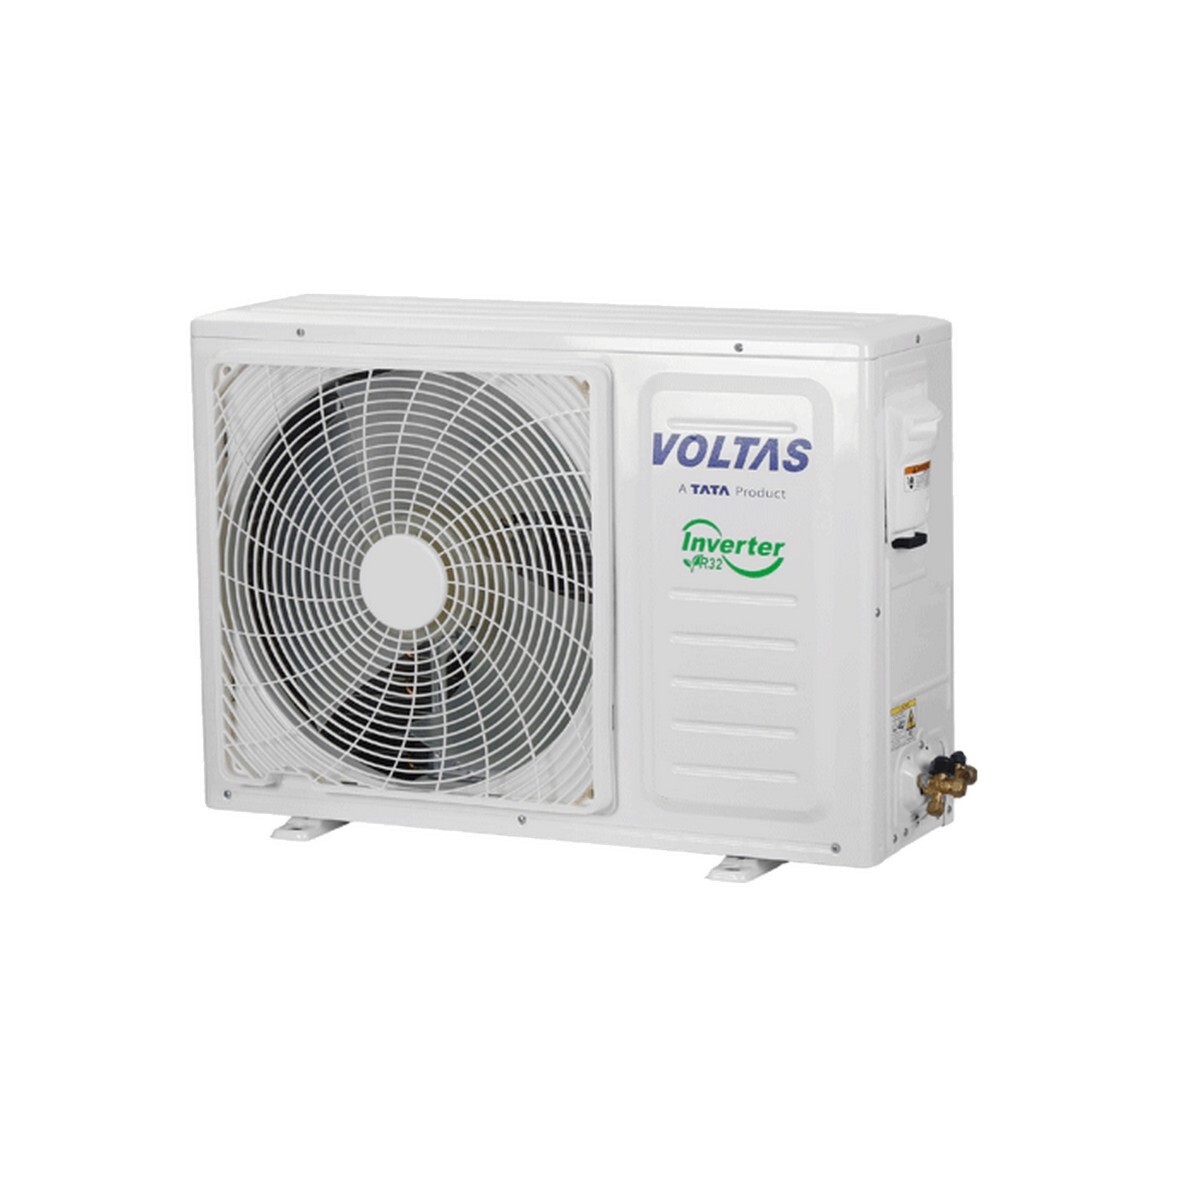 Voltas Inverter  Air Conditioner 183V VectraPri 1.5 Ton 3*